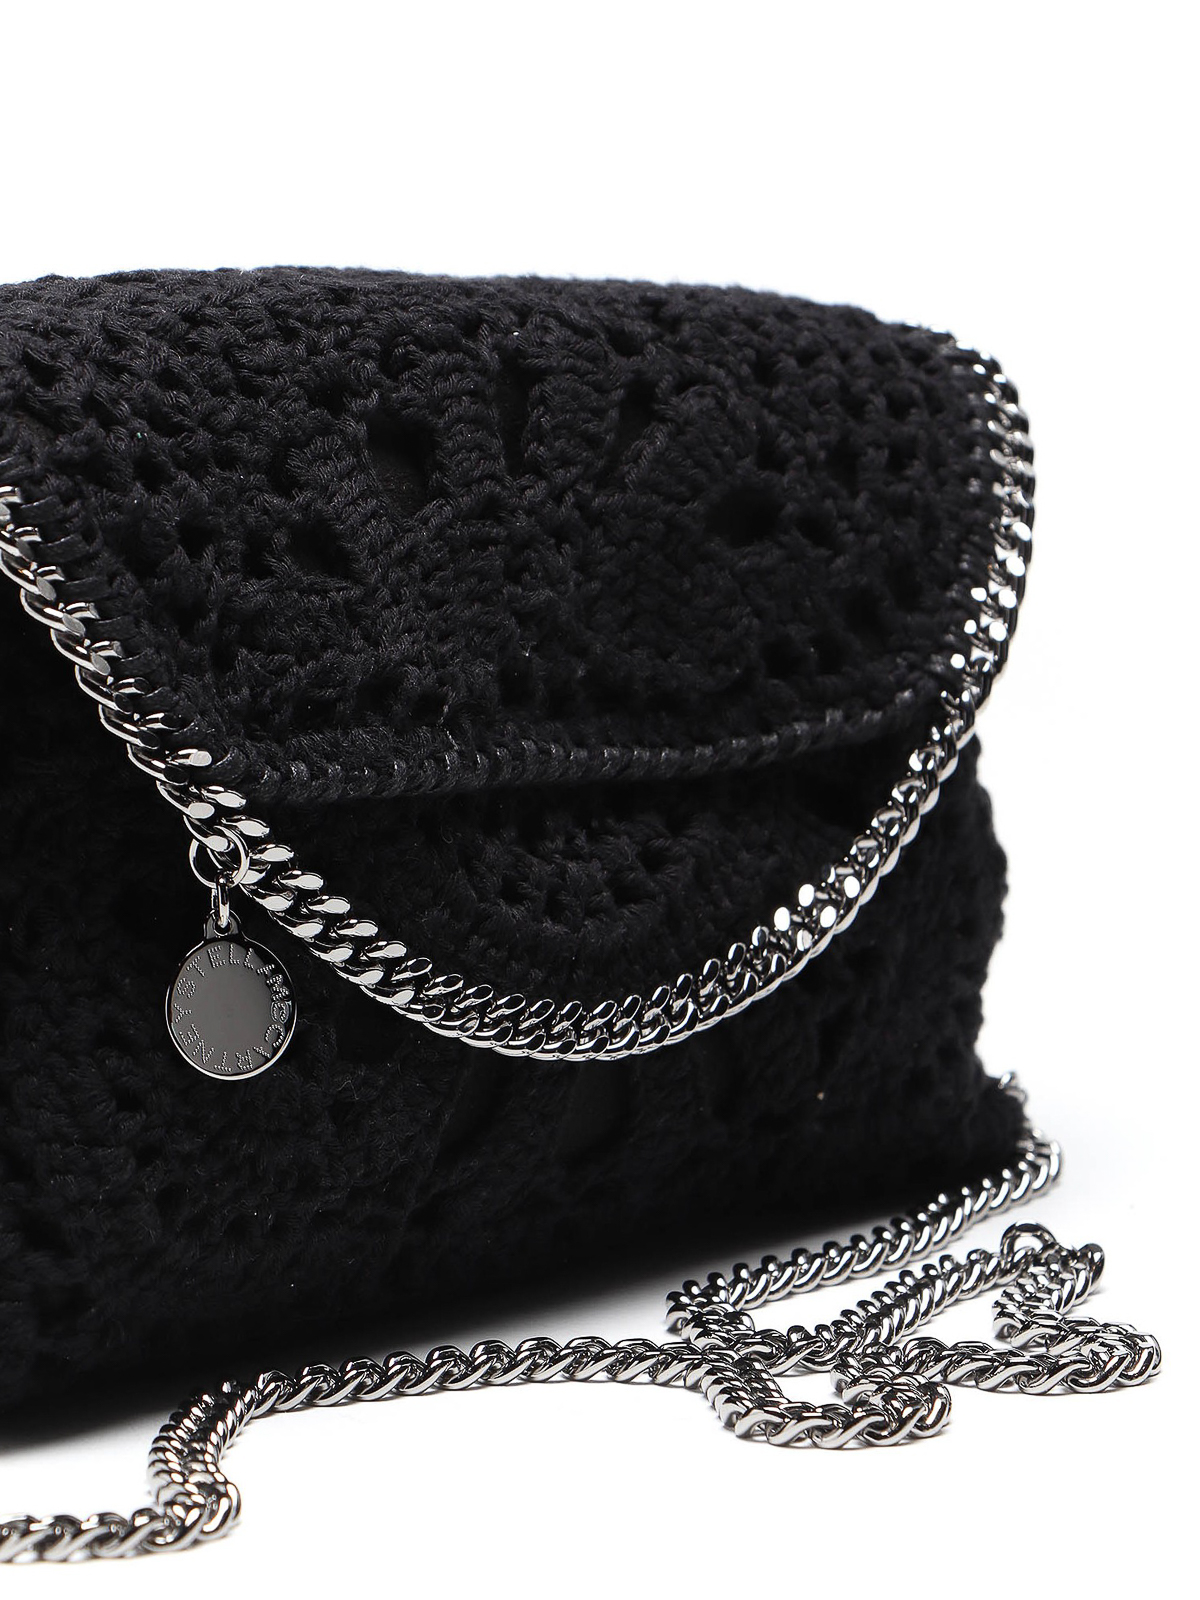 Oberon Design Leather Handbag, The Classic Tote, Wild Rose